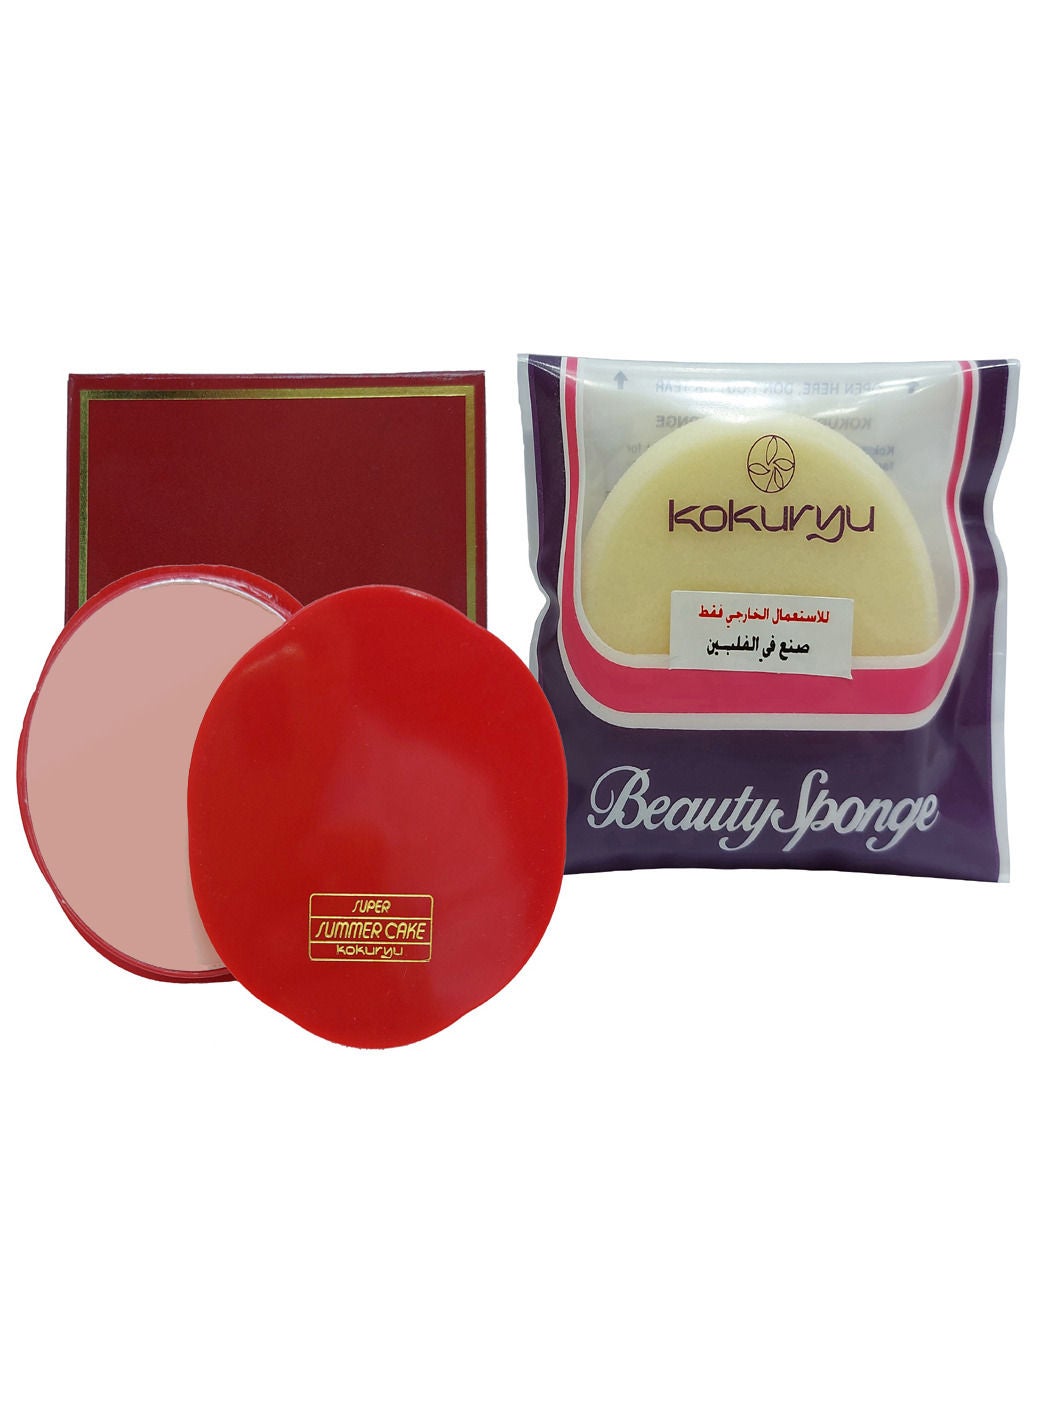 Kokuryu Compact Powder Super Summer Cake Beauty Cosmetics + Free Gift  Orange | pgmall